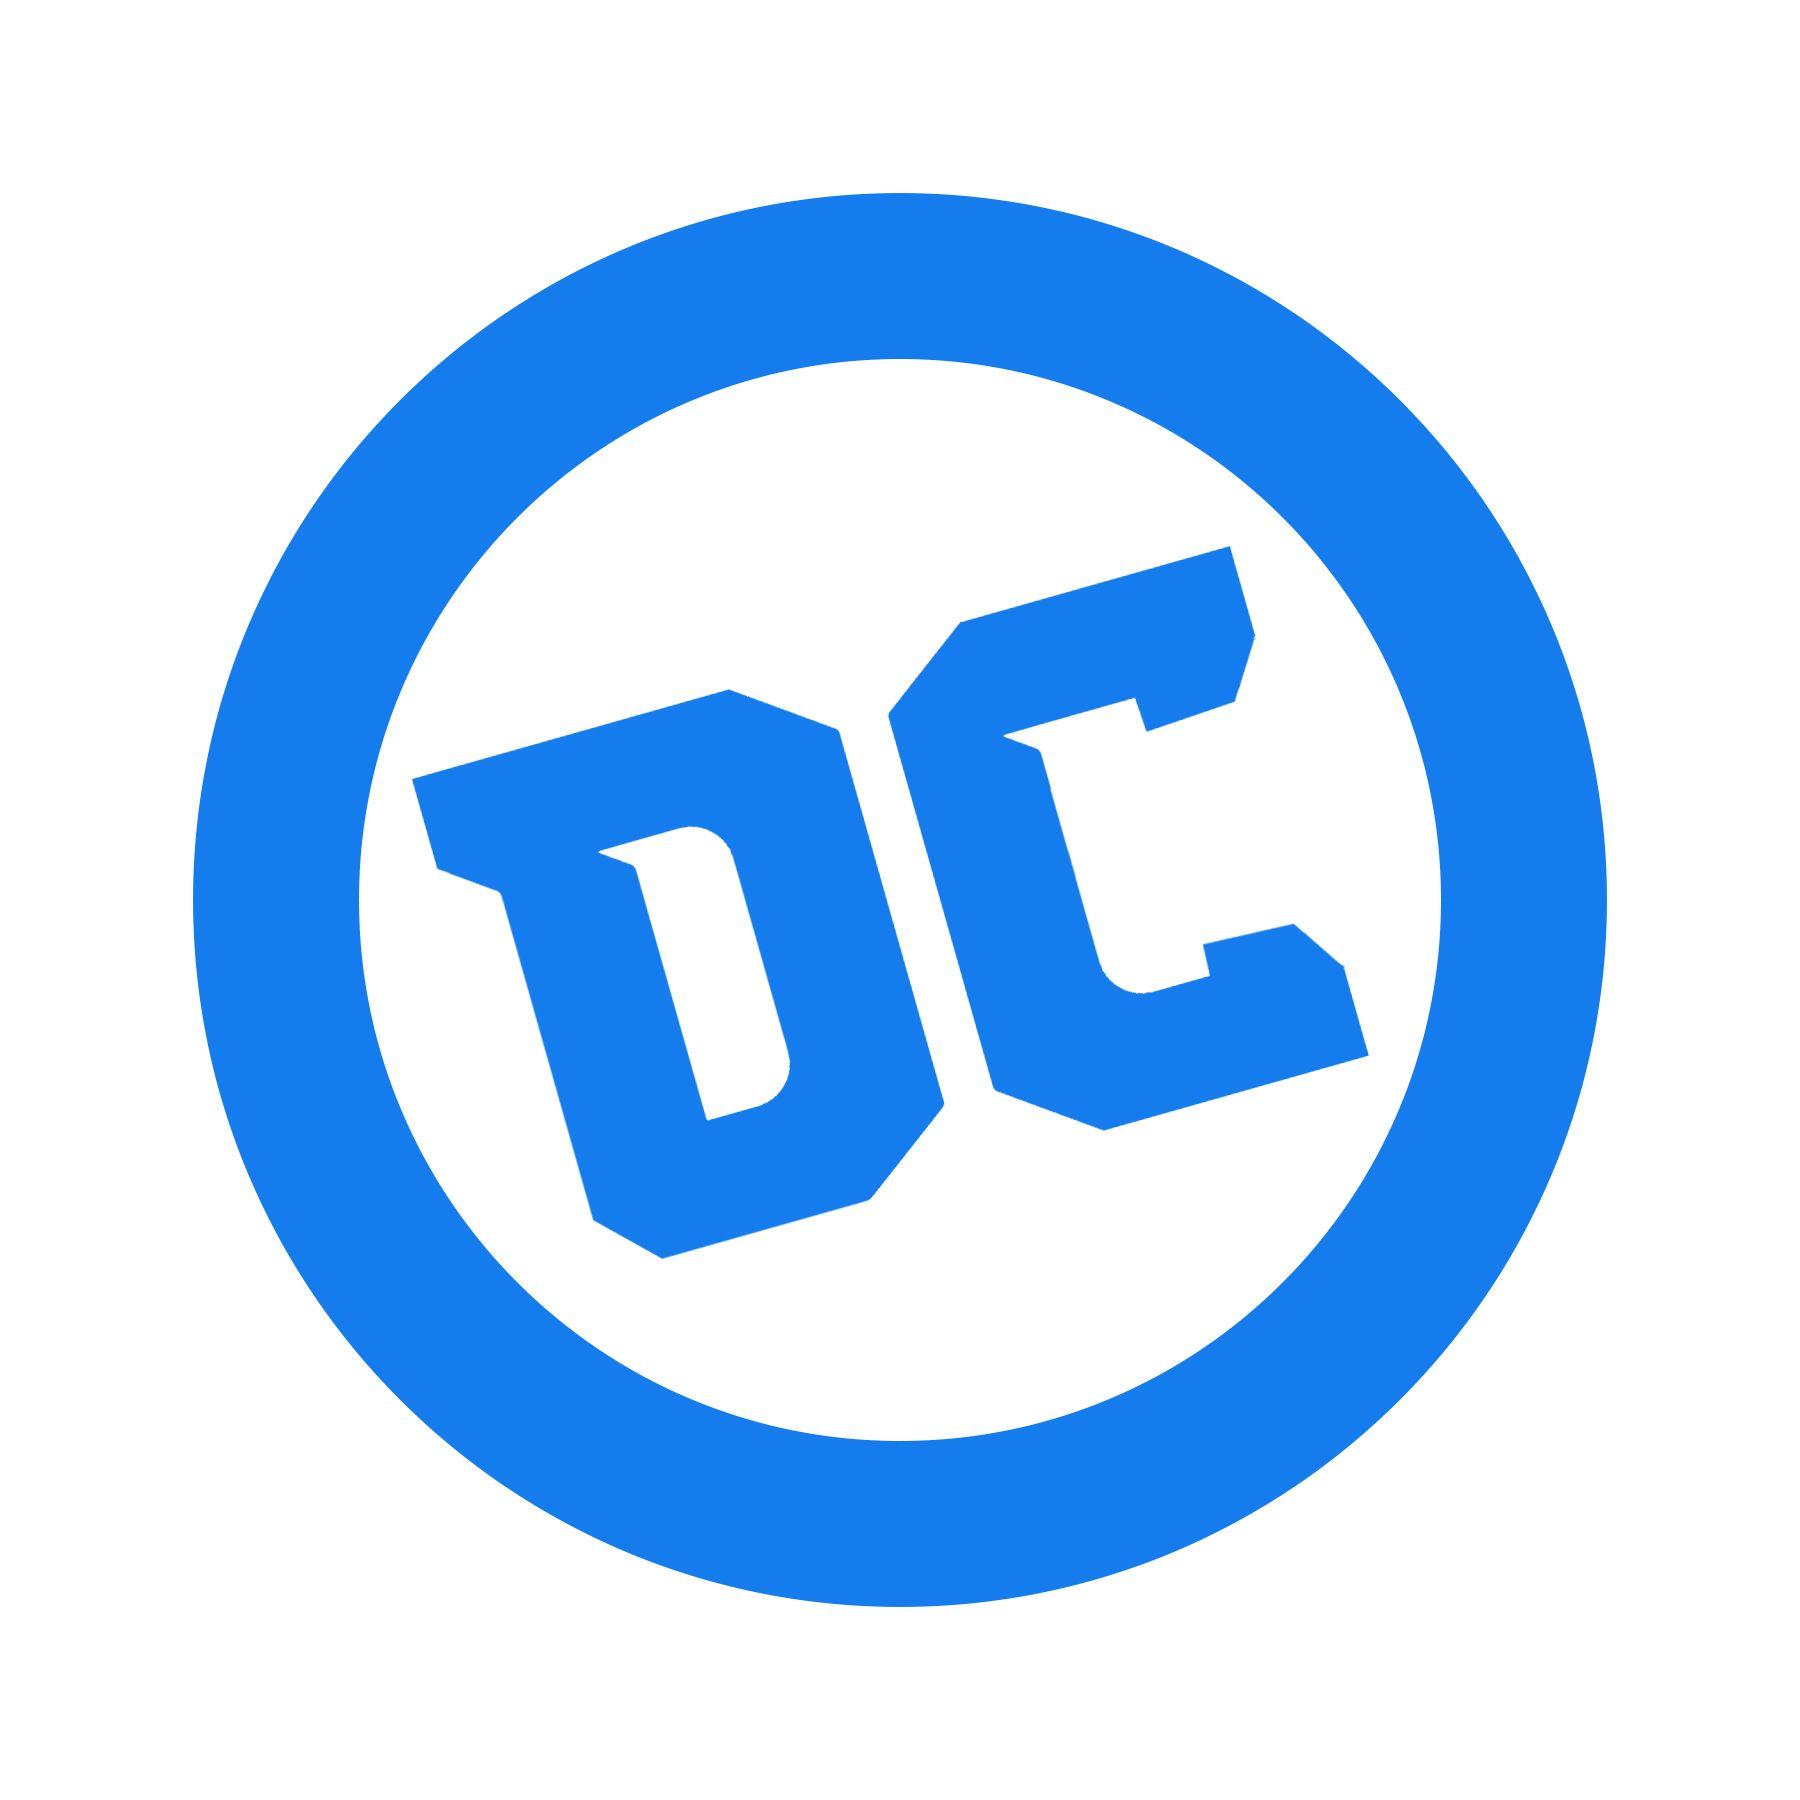 New DC Logo - New DC logo